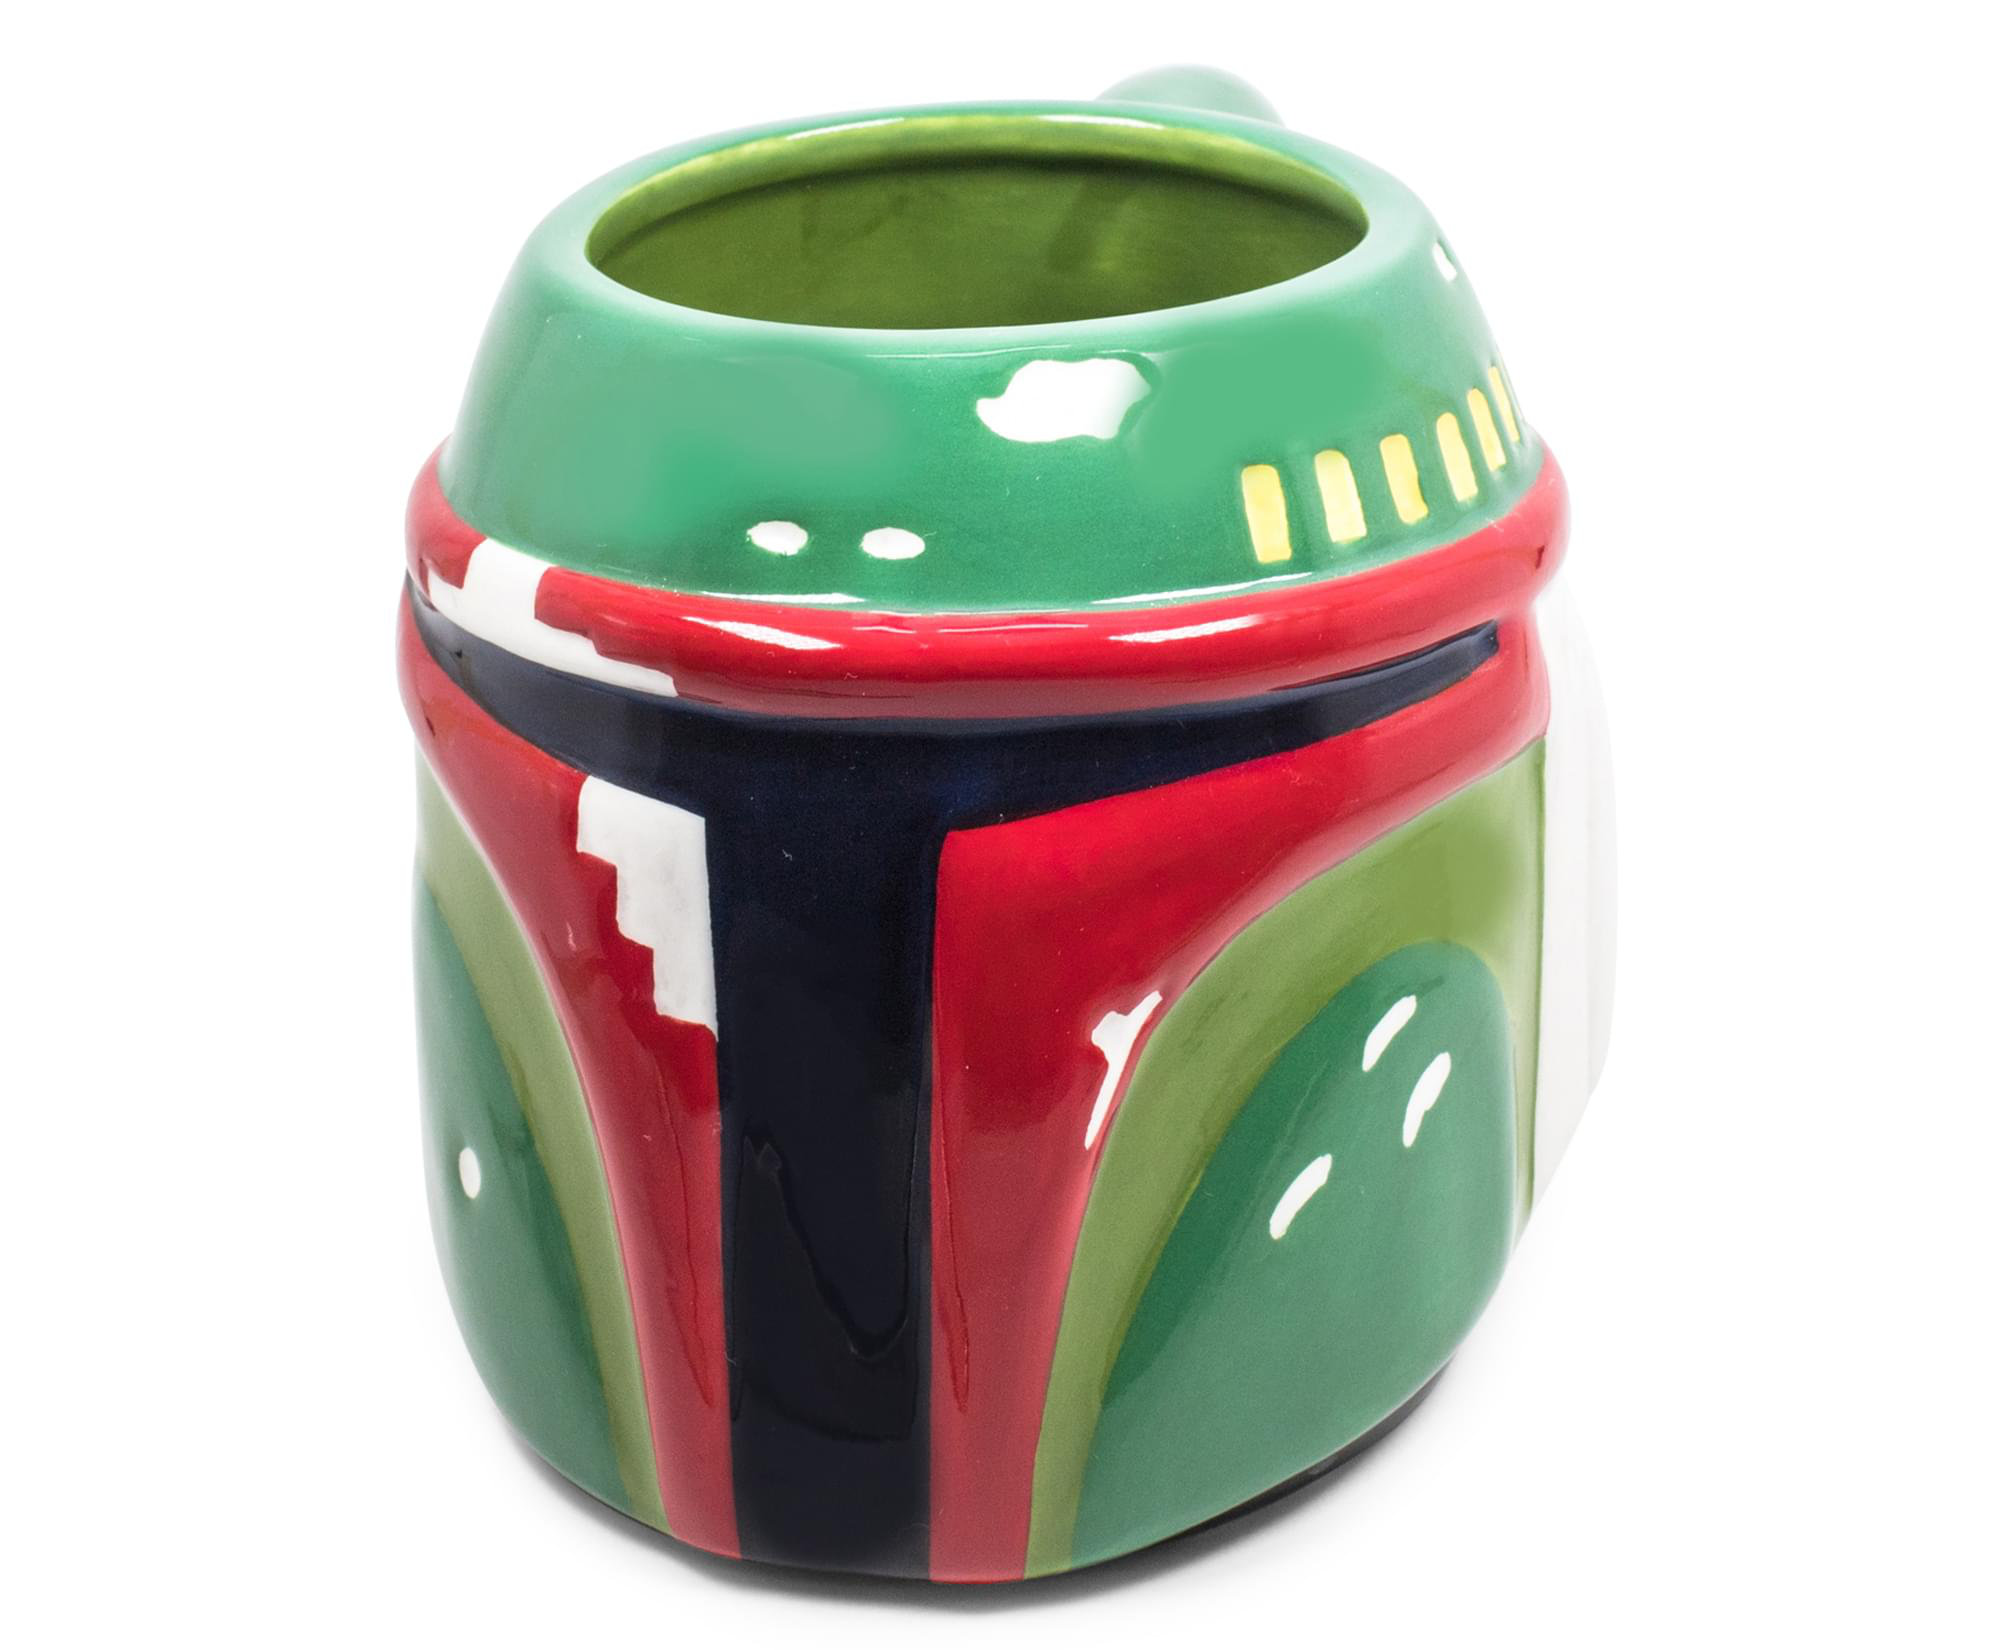 Star Wars Mandalorian Helmet Coffee Mug, 20 ounces | GameStop